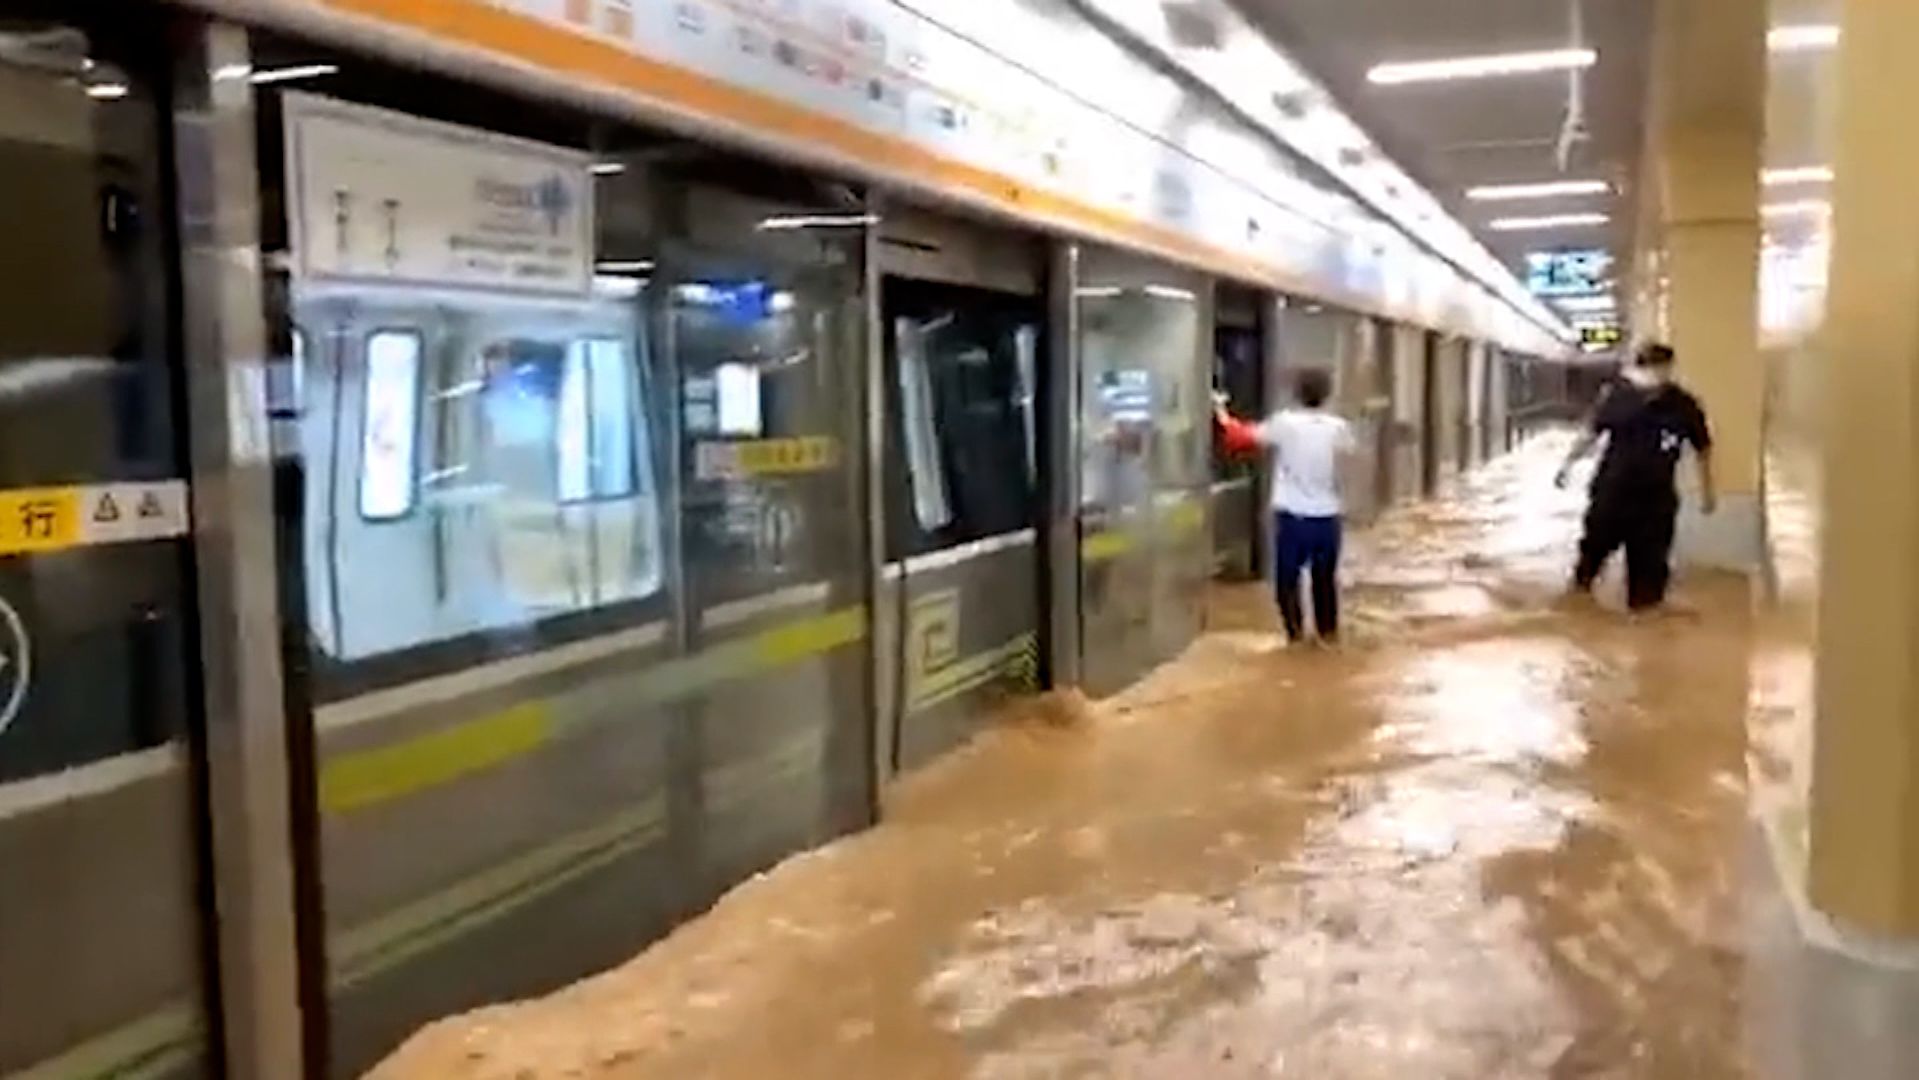 A flooded subway station in Zhengzhou, China, on July 21.